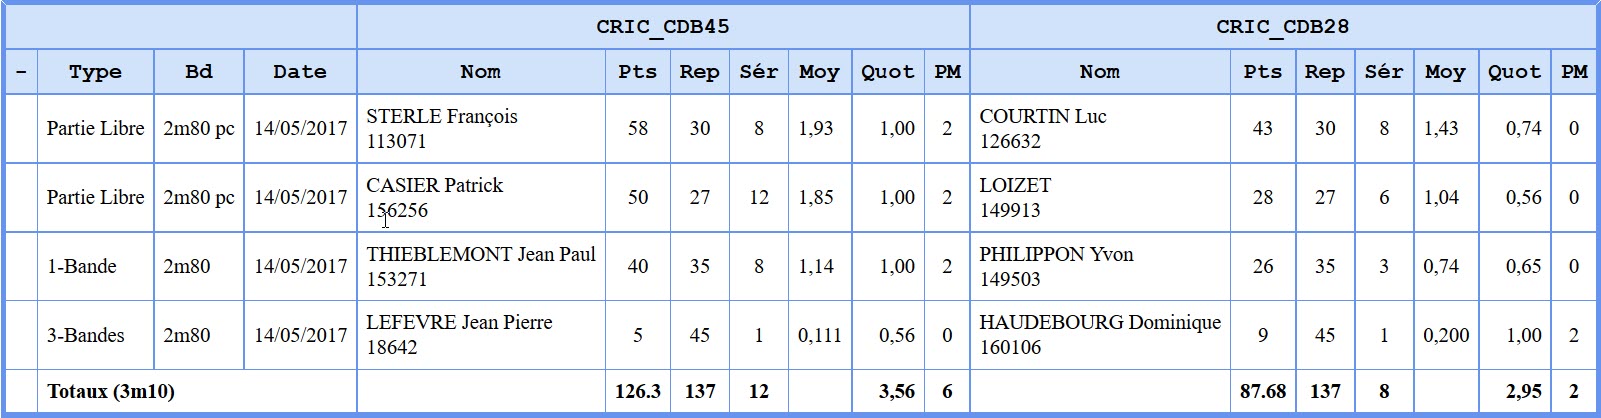 LBCVL CRIC 2017 CDB45 VS CDB28